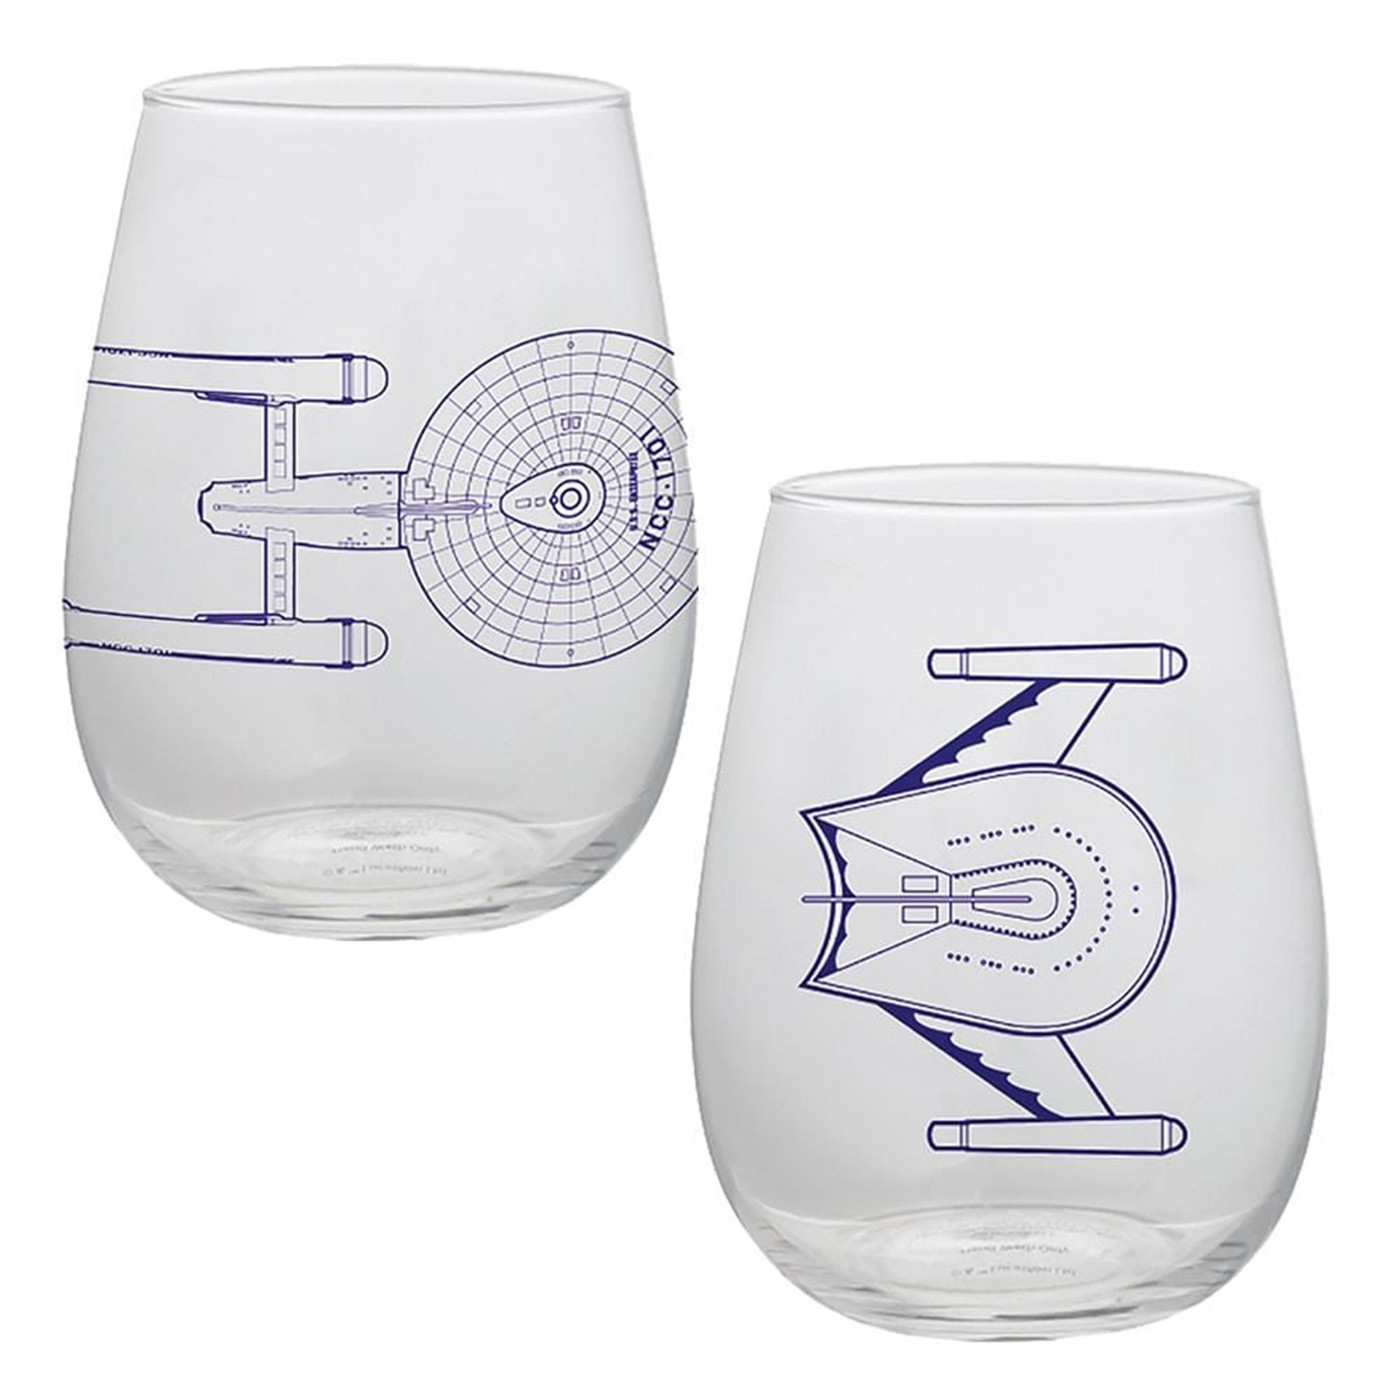 Star Trek 18 oz. Contour Glasses - Set of Two